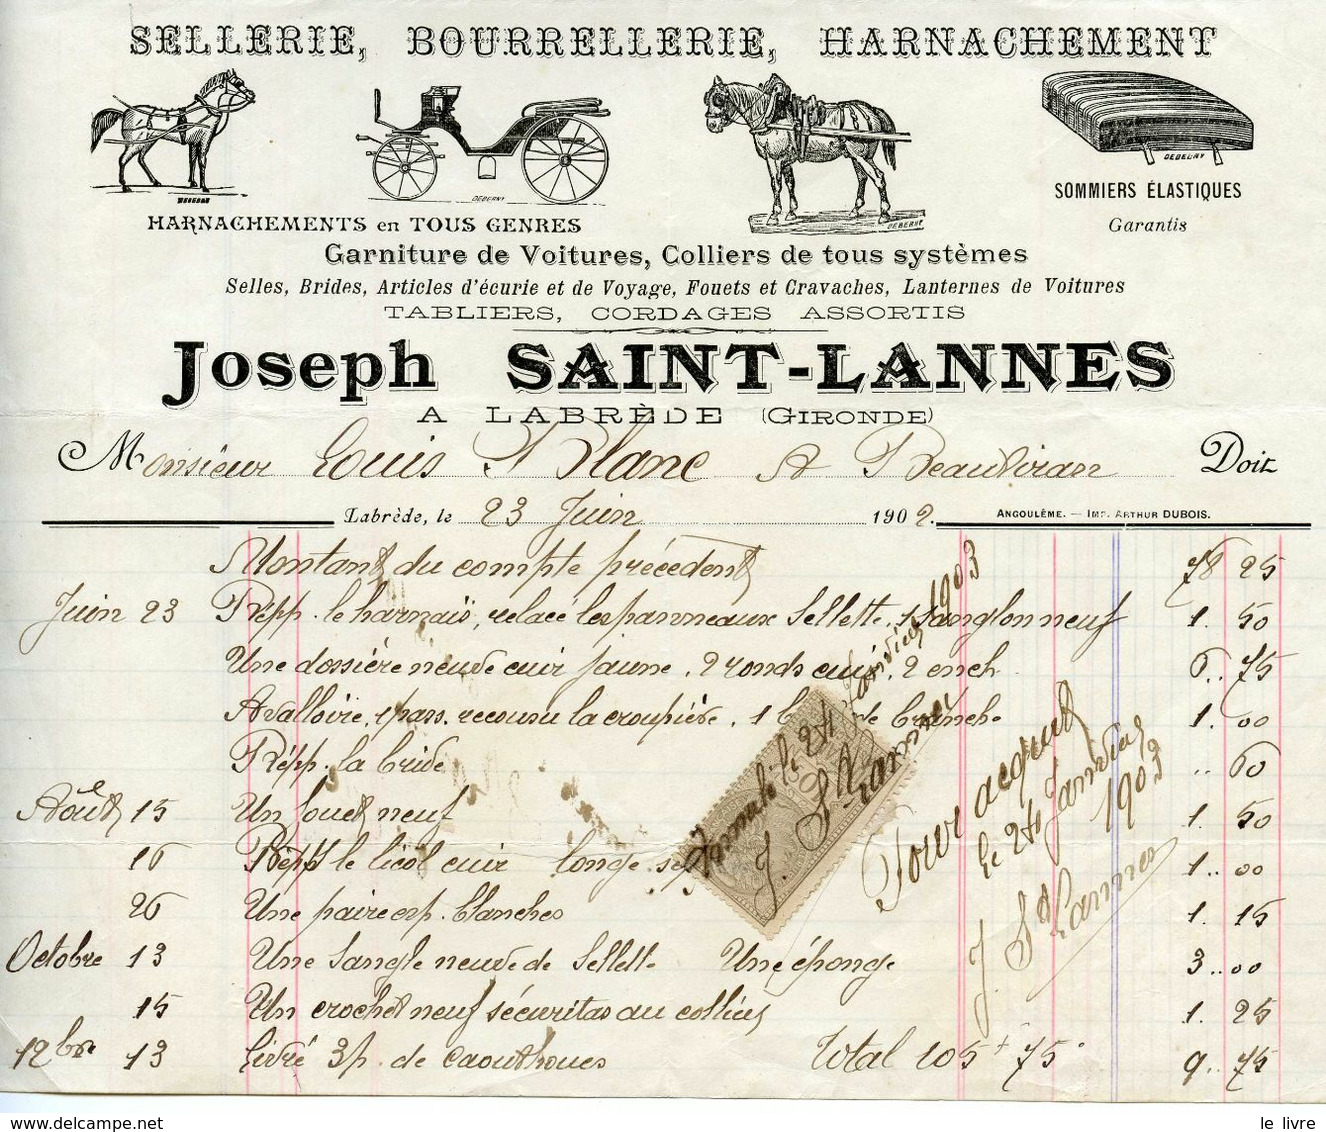 FACTURE SELLERIE BOURRELLERIE HARNACHEMENT JOSEPH SAINT-LANNES A LABREDE GIRONDE 1902